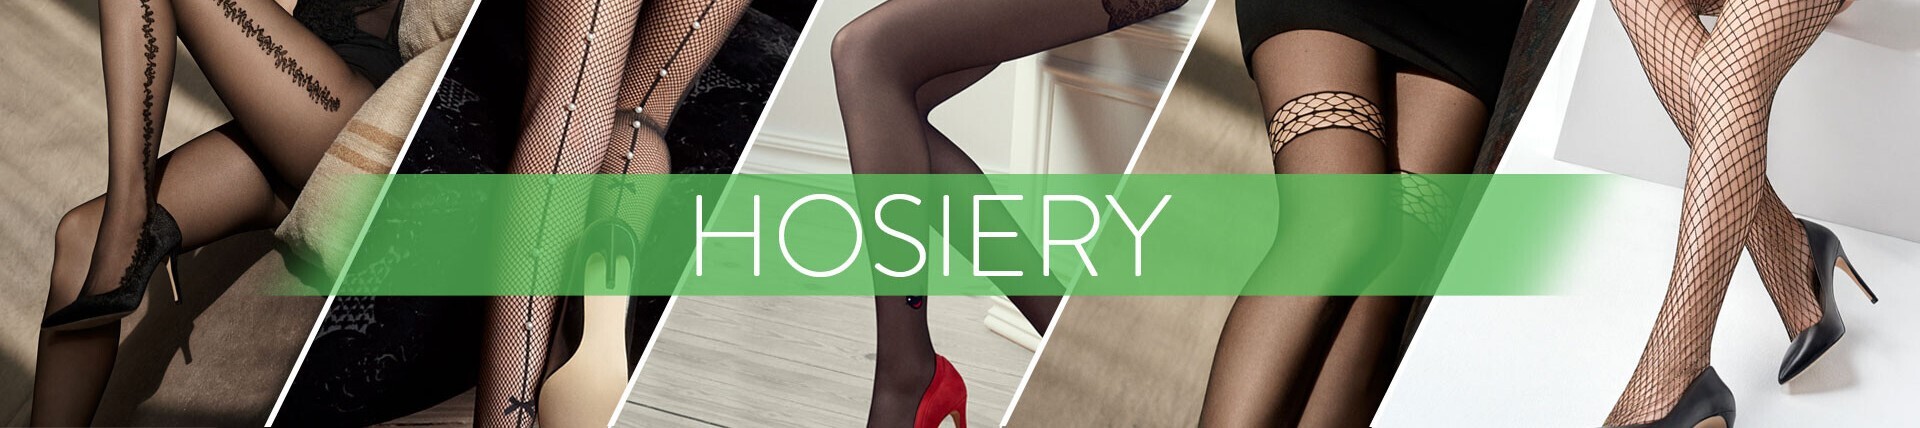 Tights, hosiery | UniLady  ®